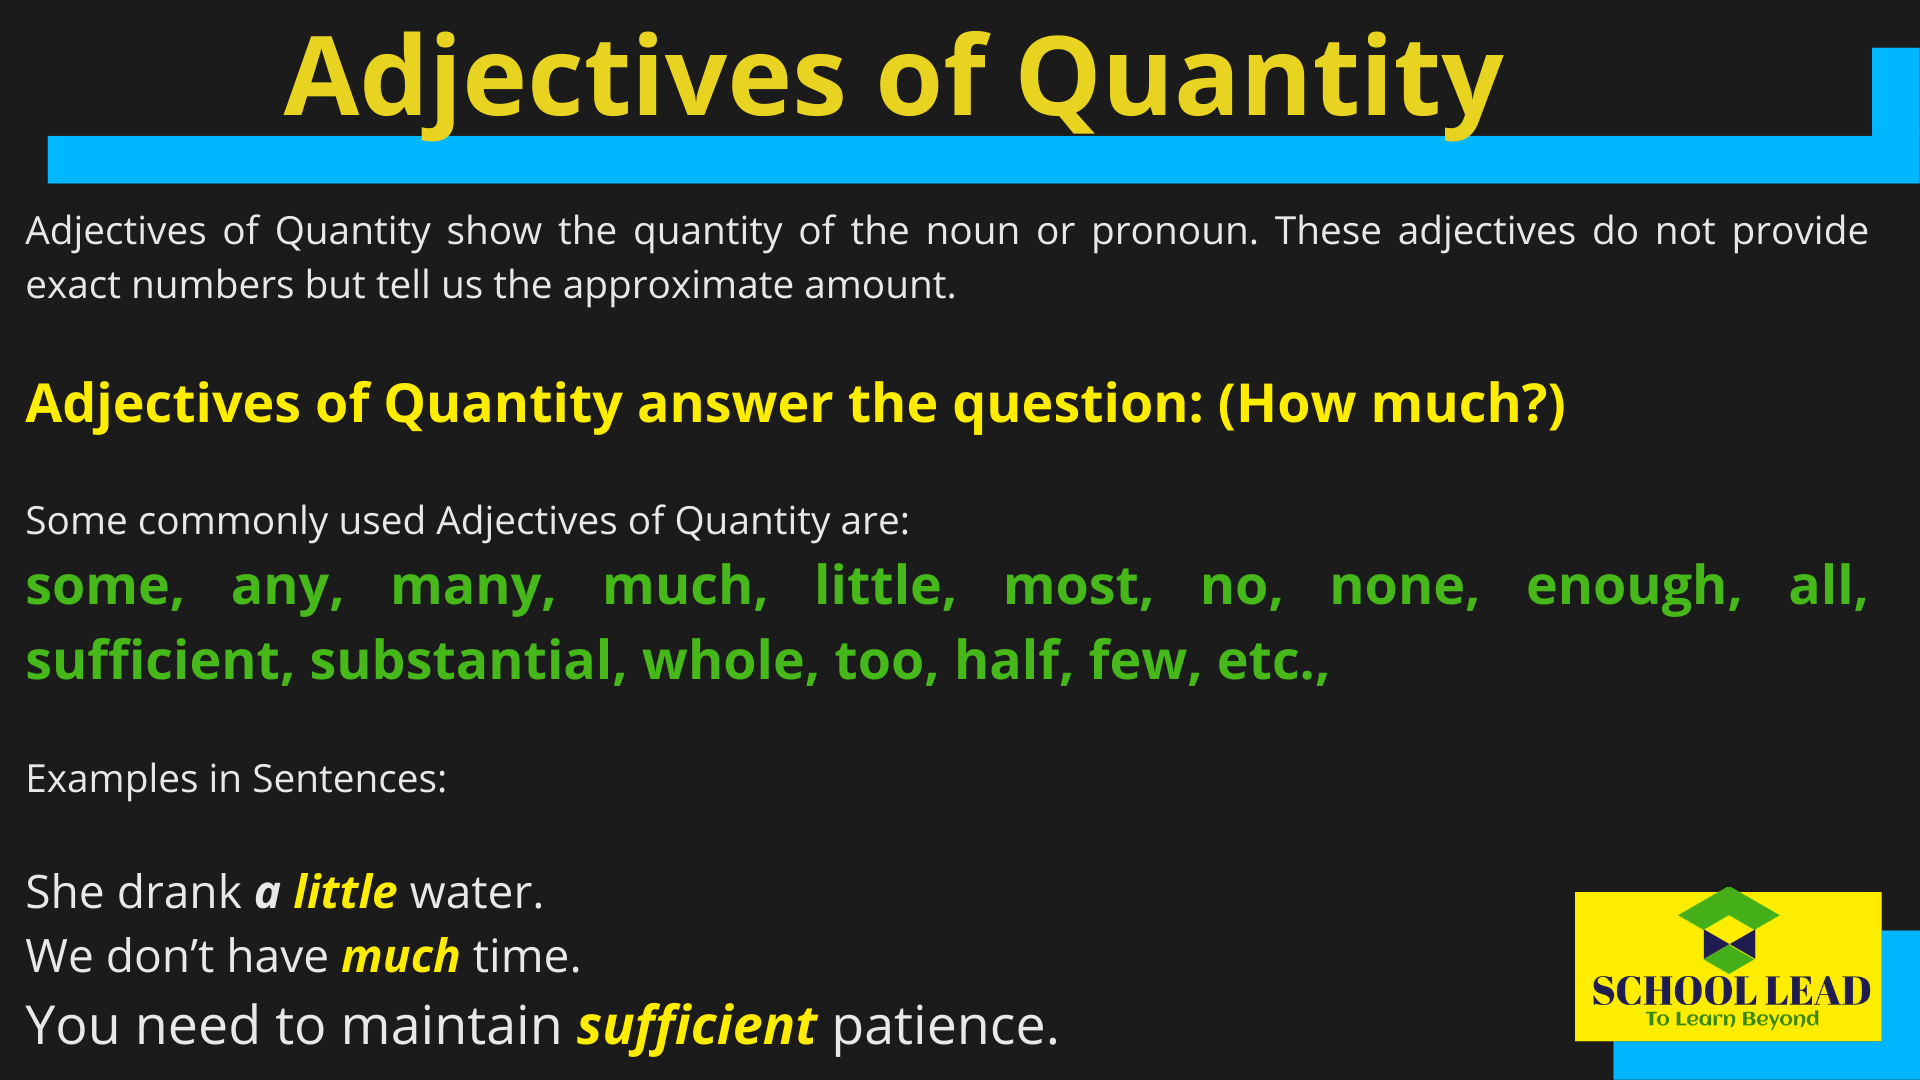 adjectives-of-quantity-school-lead